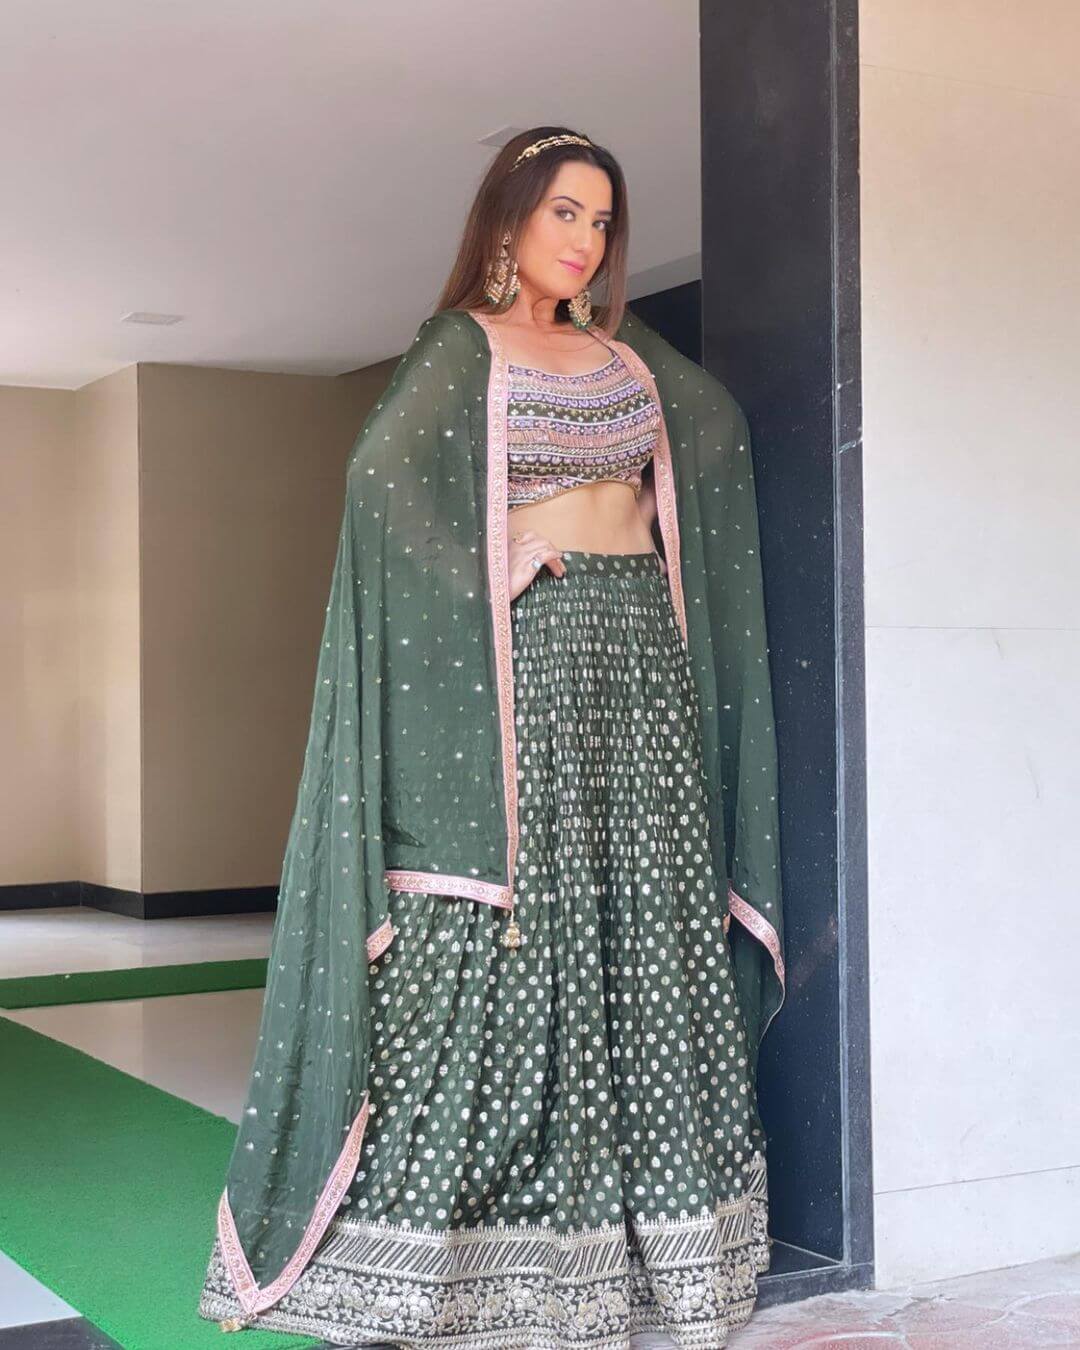 Aalisha Panwar Look Gorgeous In Green Lehenga Outfit Aalisha Panwar Fashionable Outfit Inspo